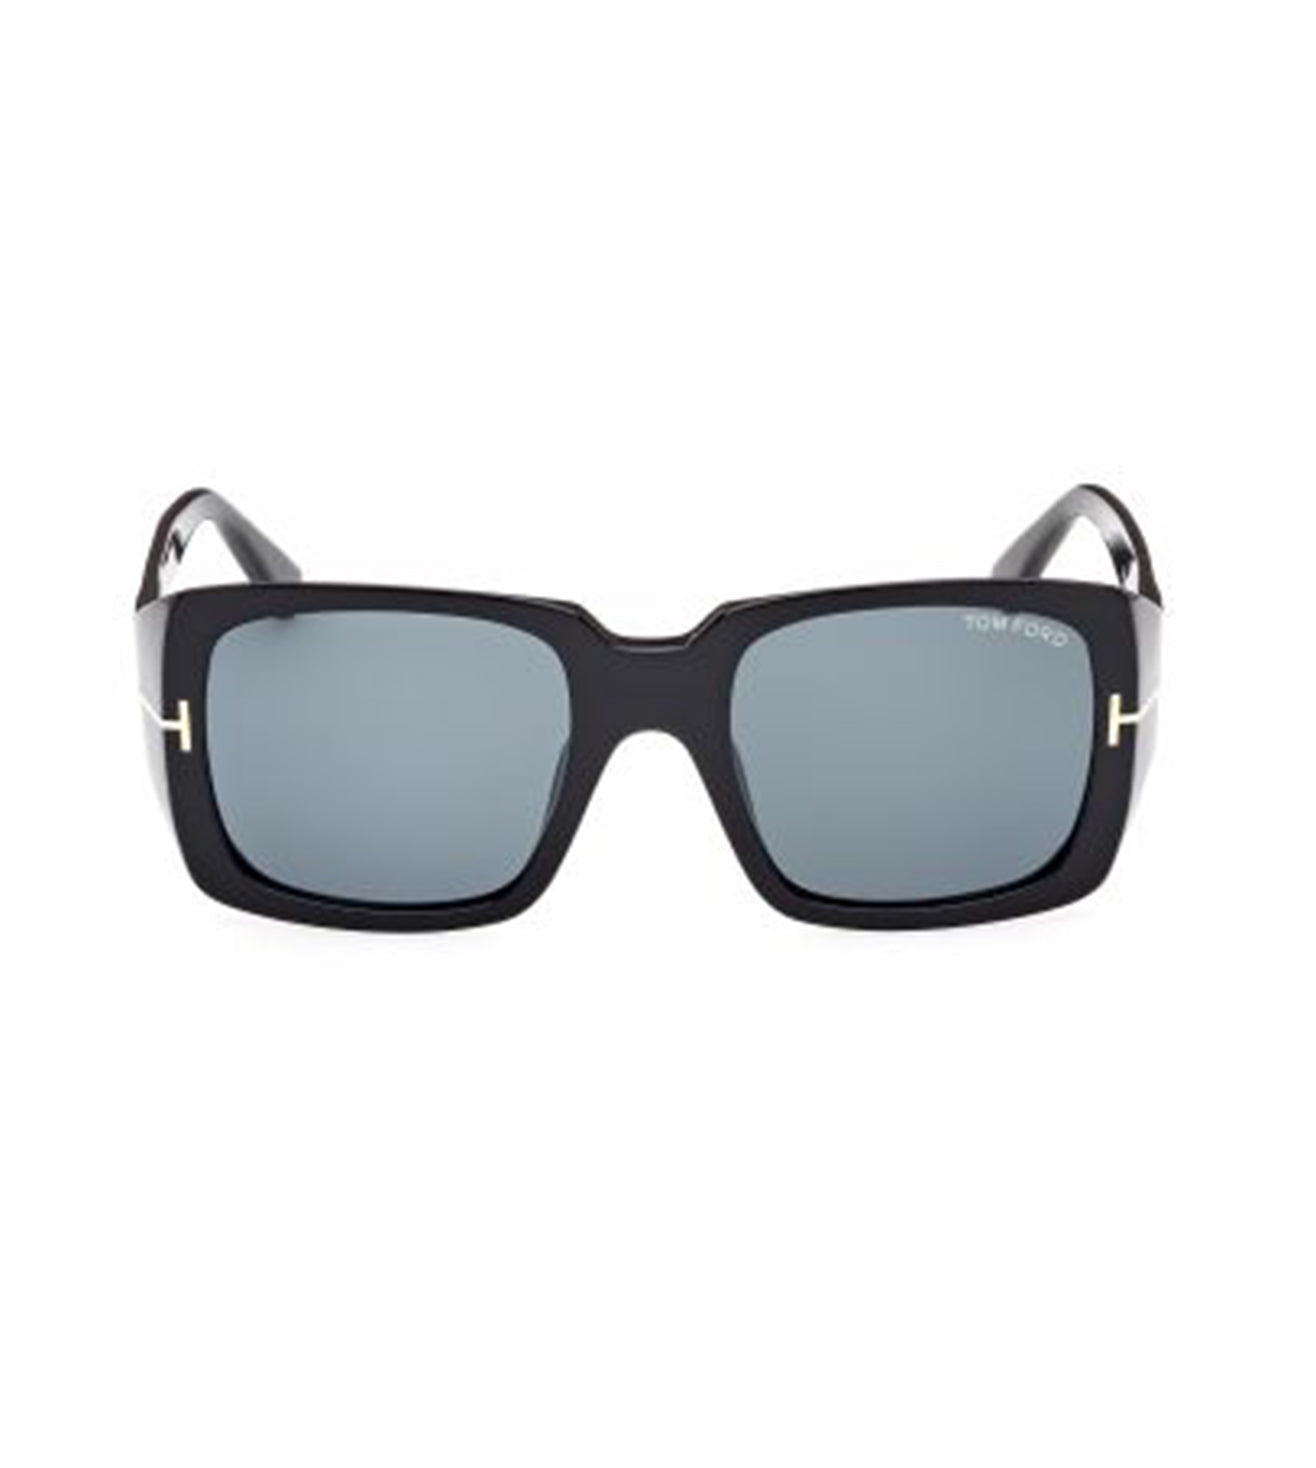 Tom Ford Ryder Women's Blue Square Sunglasses